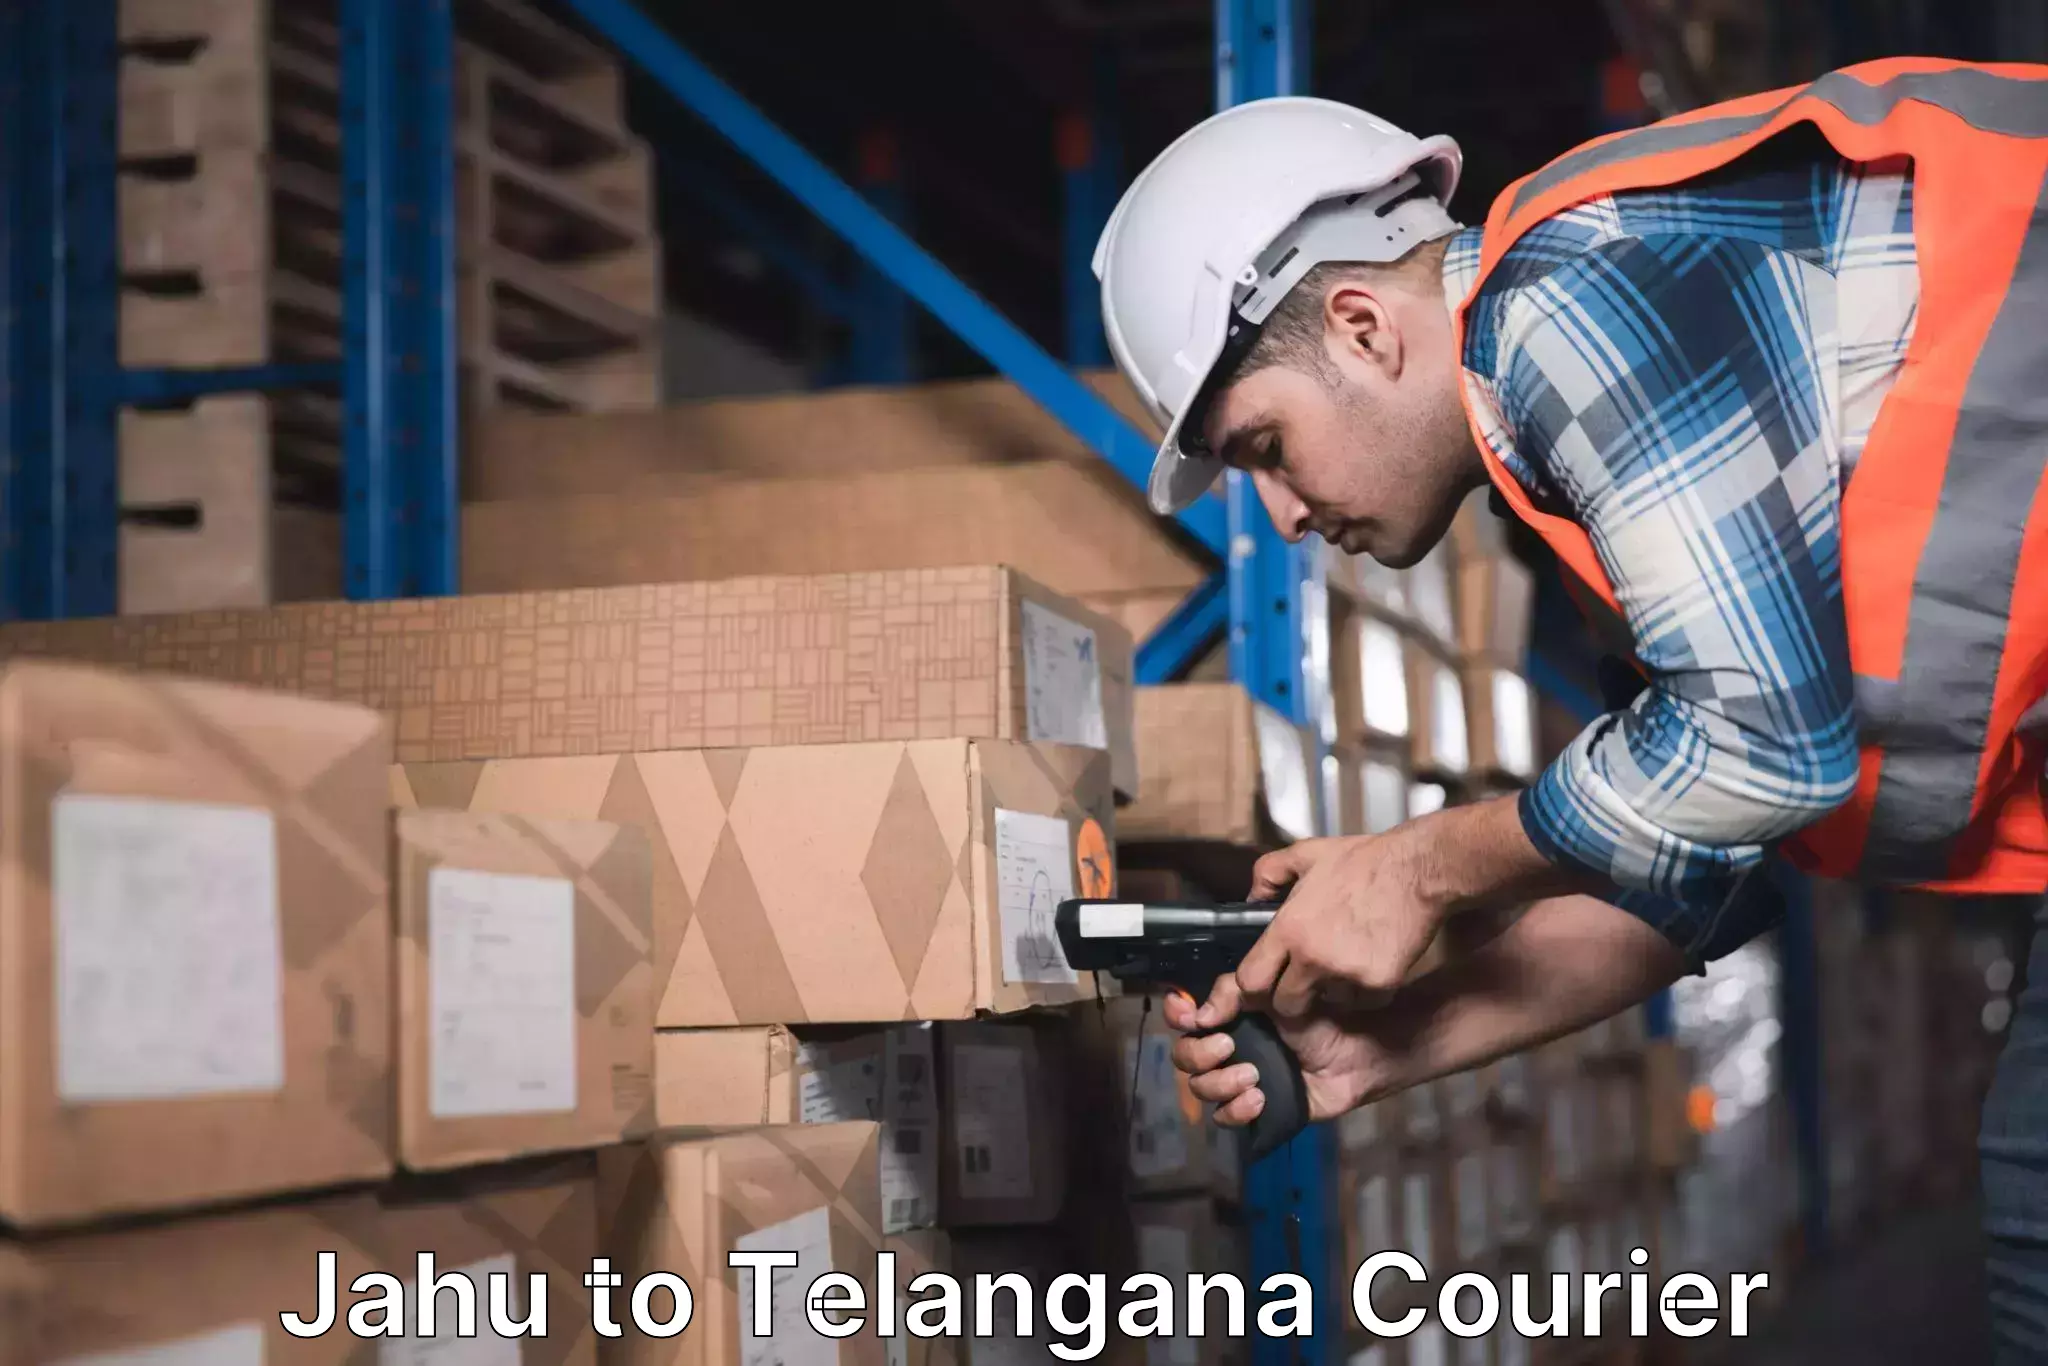 Courier app Jahu to Telangana